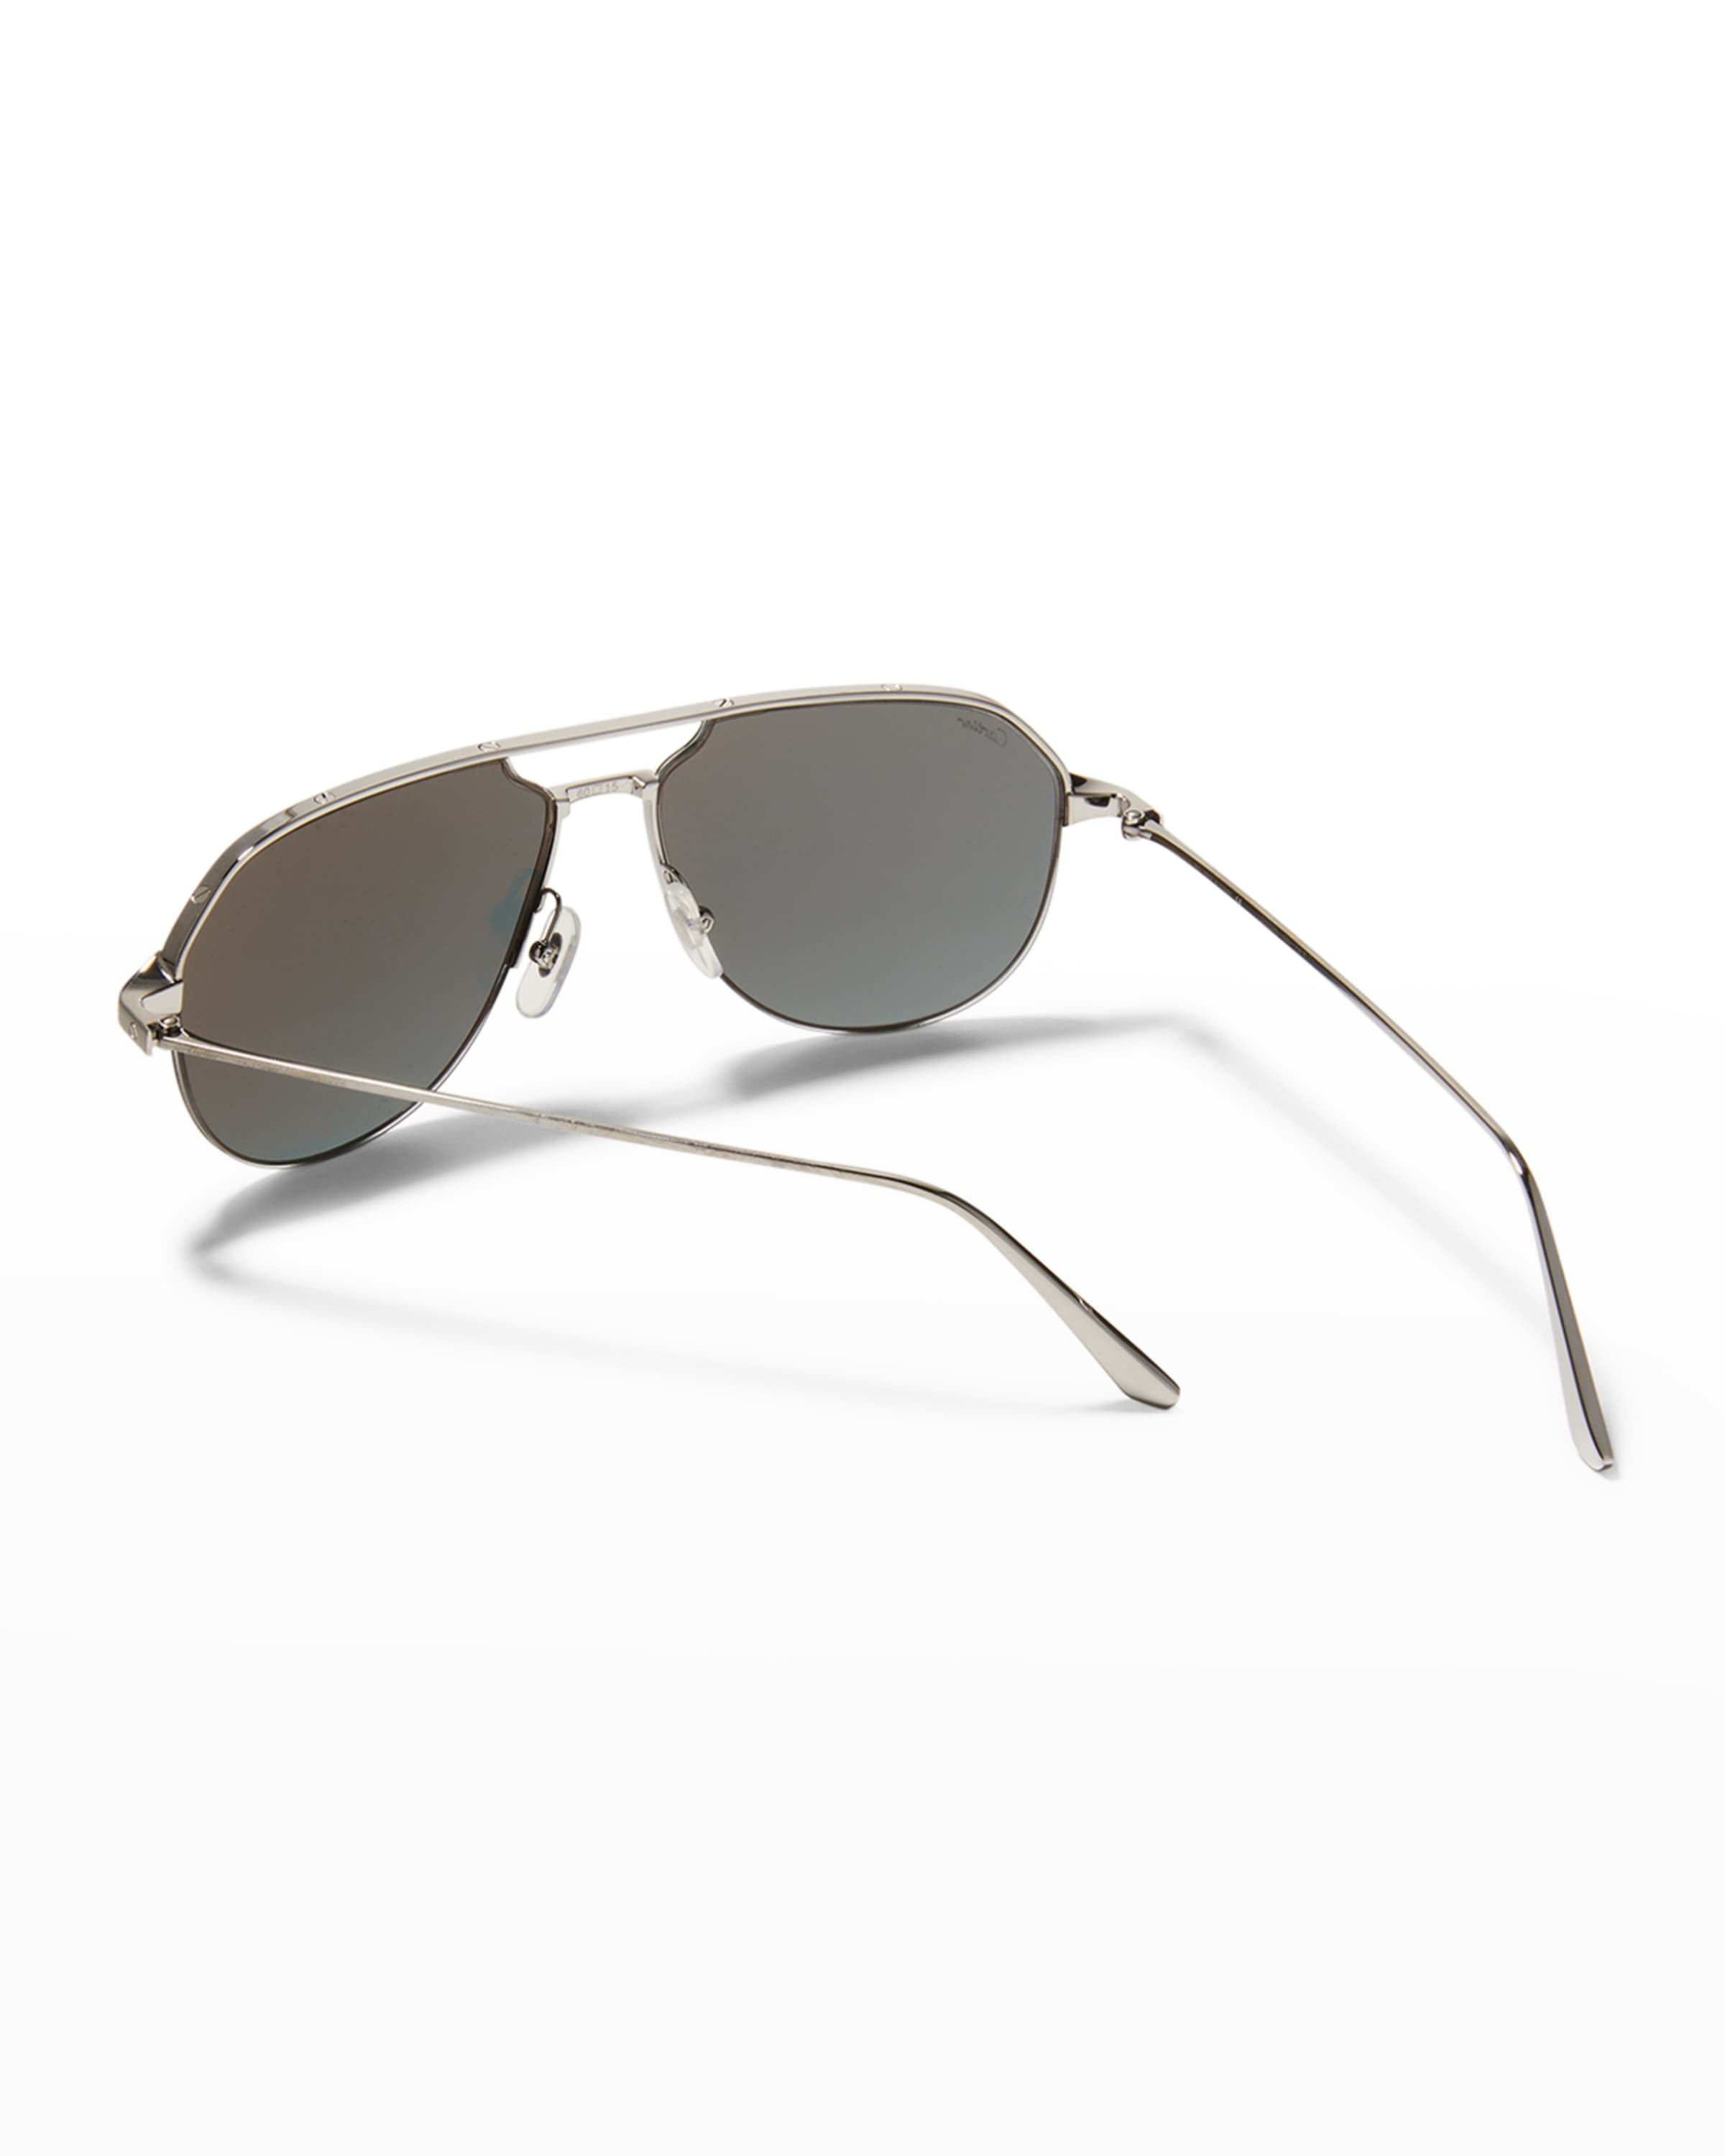 Men's Double-Bridge Metal Aviator Sunglasses - 2